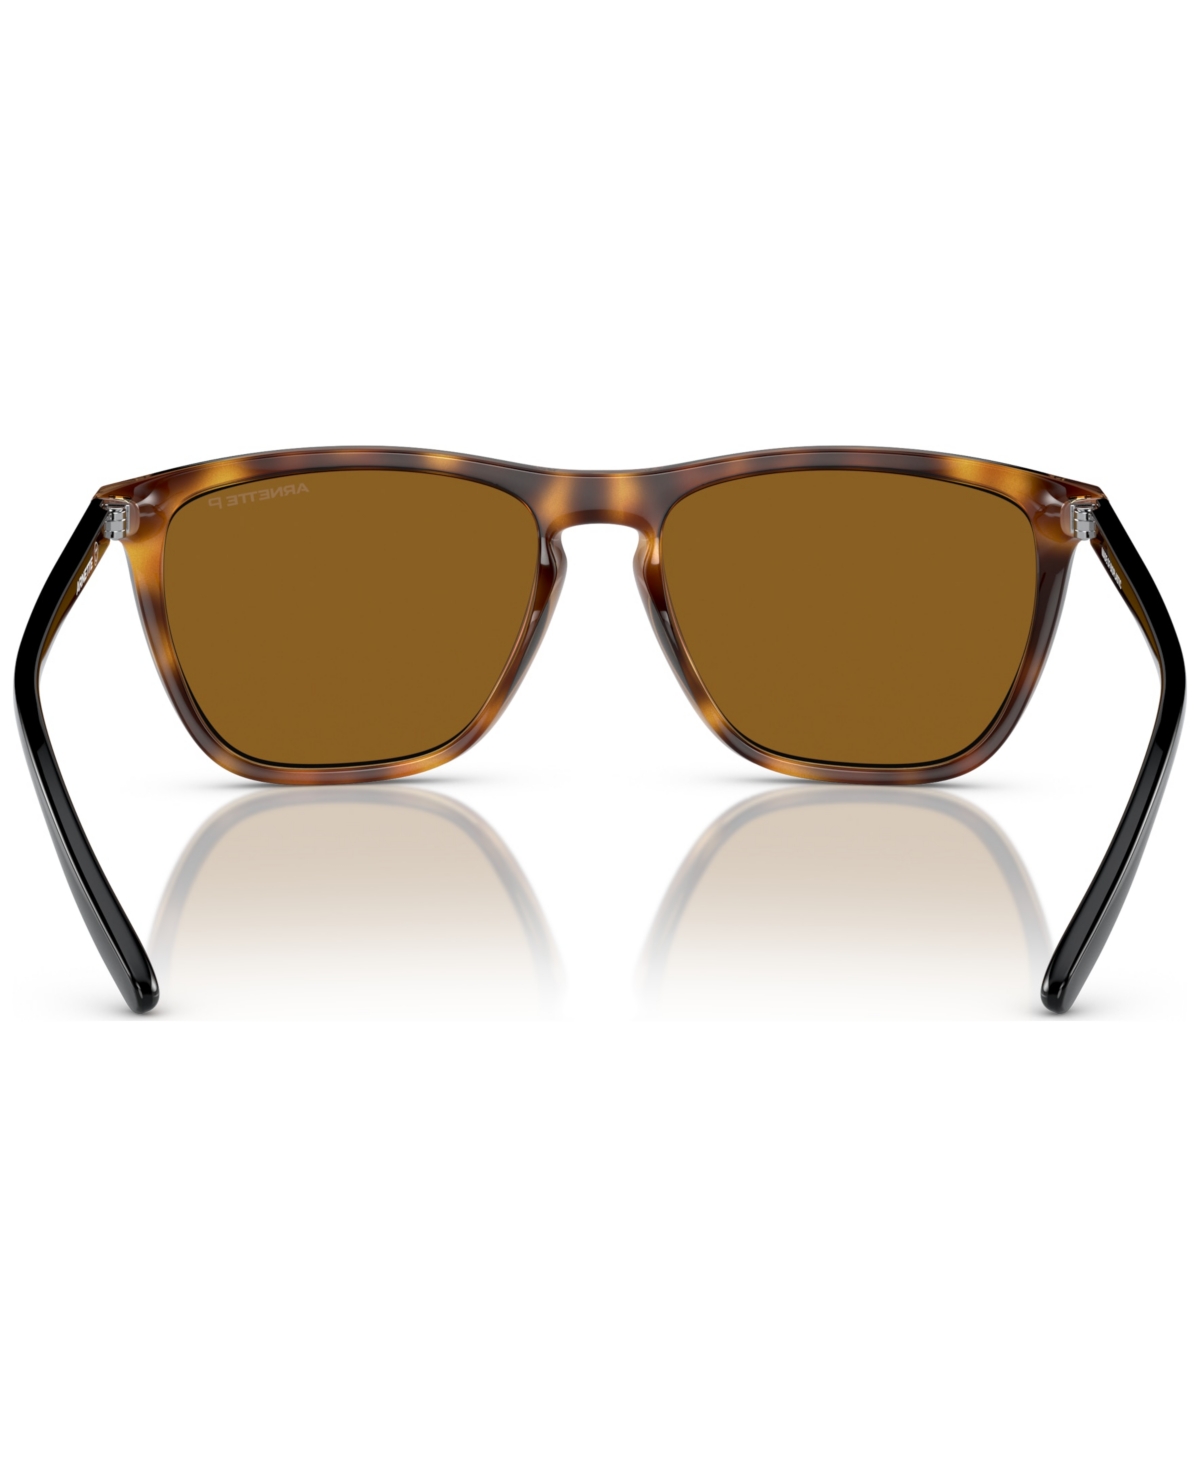 Shop Arnette Men's Polarized Sunglasses, Fry In Dark Havana